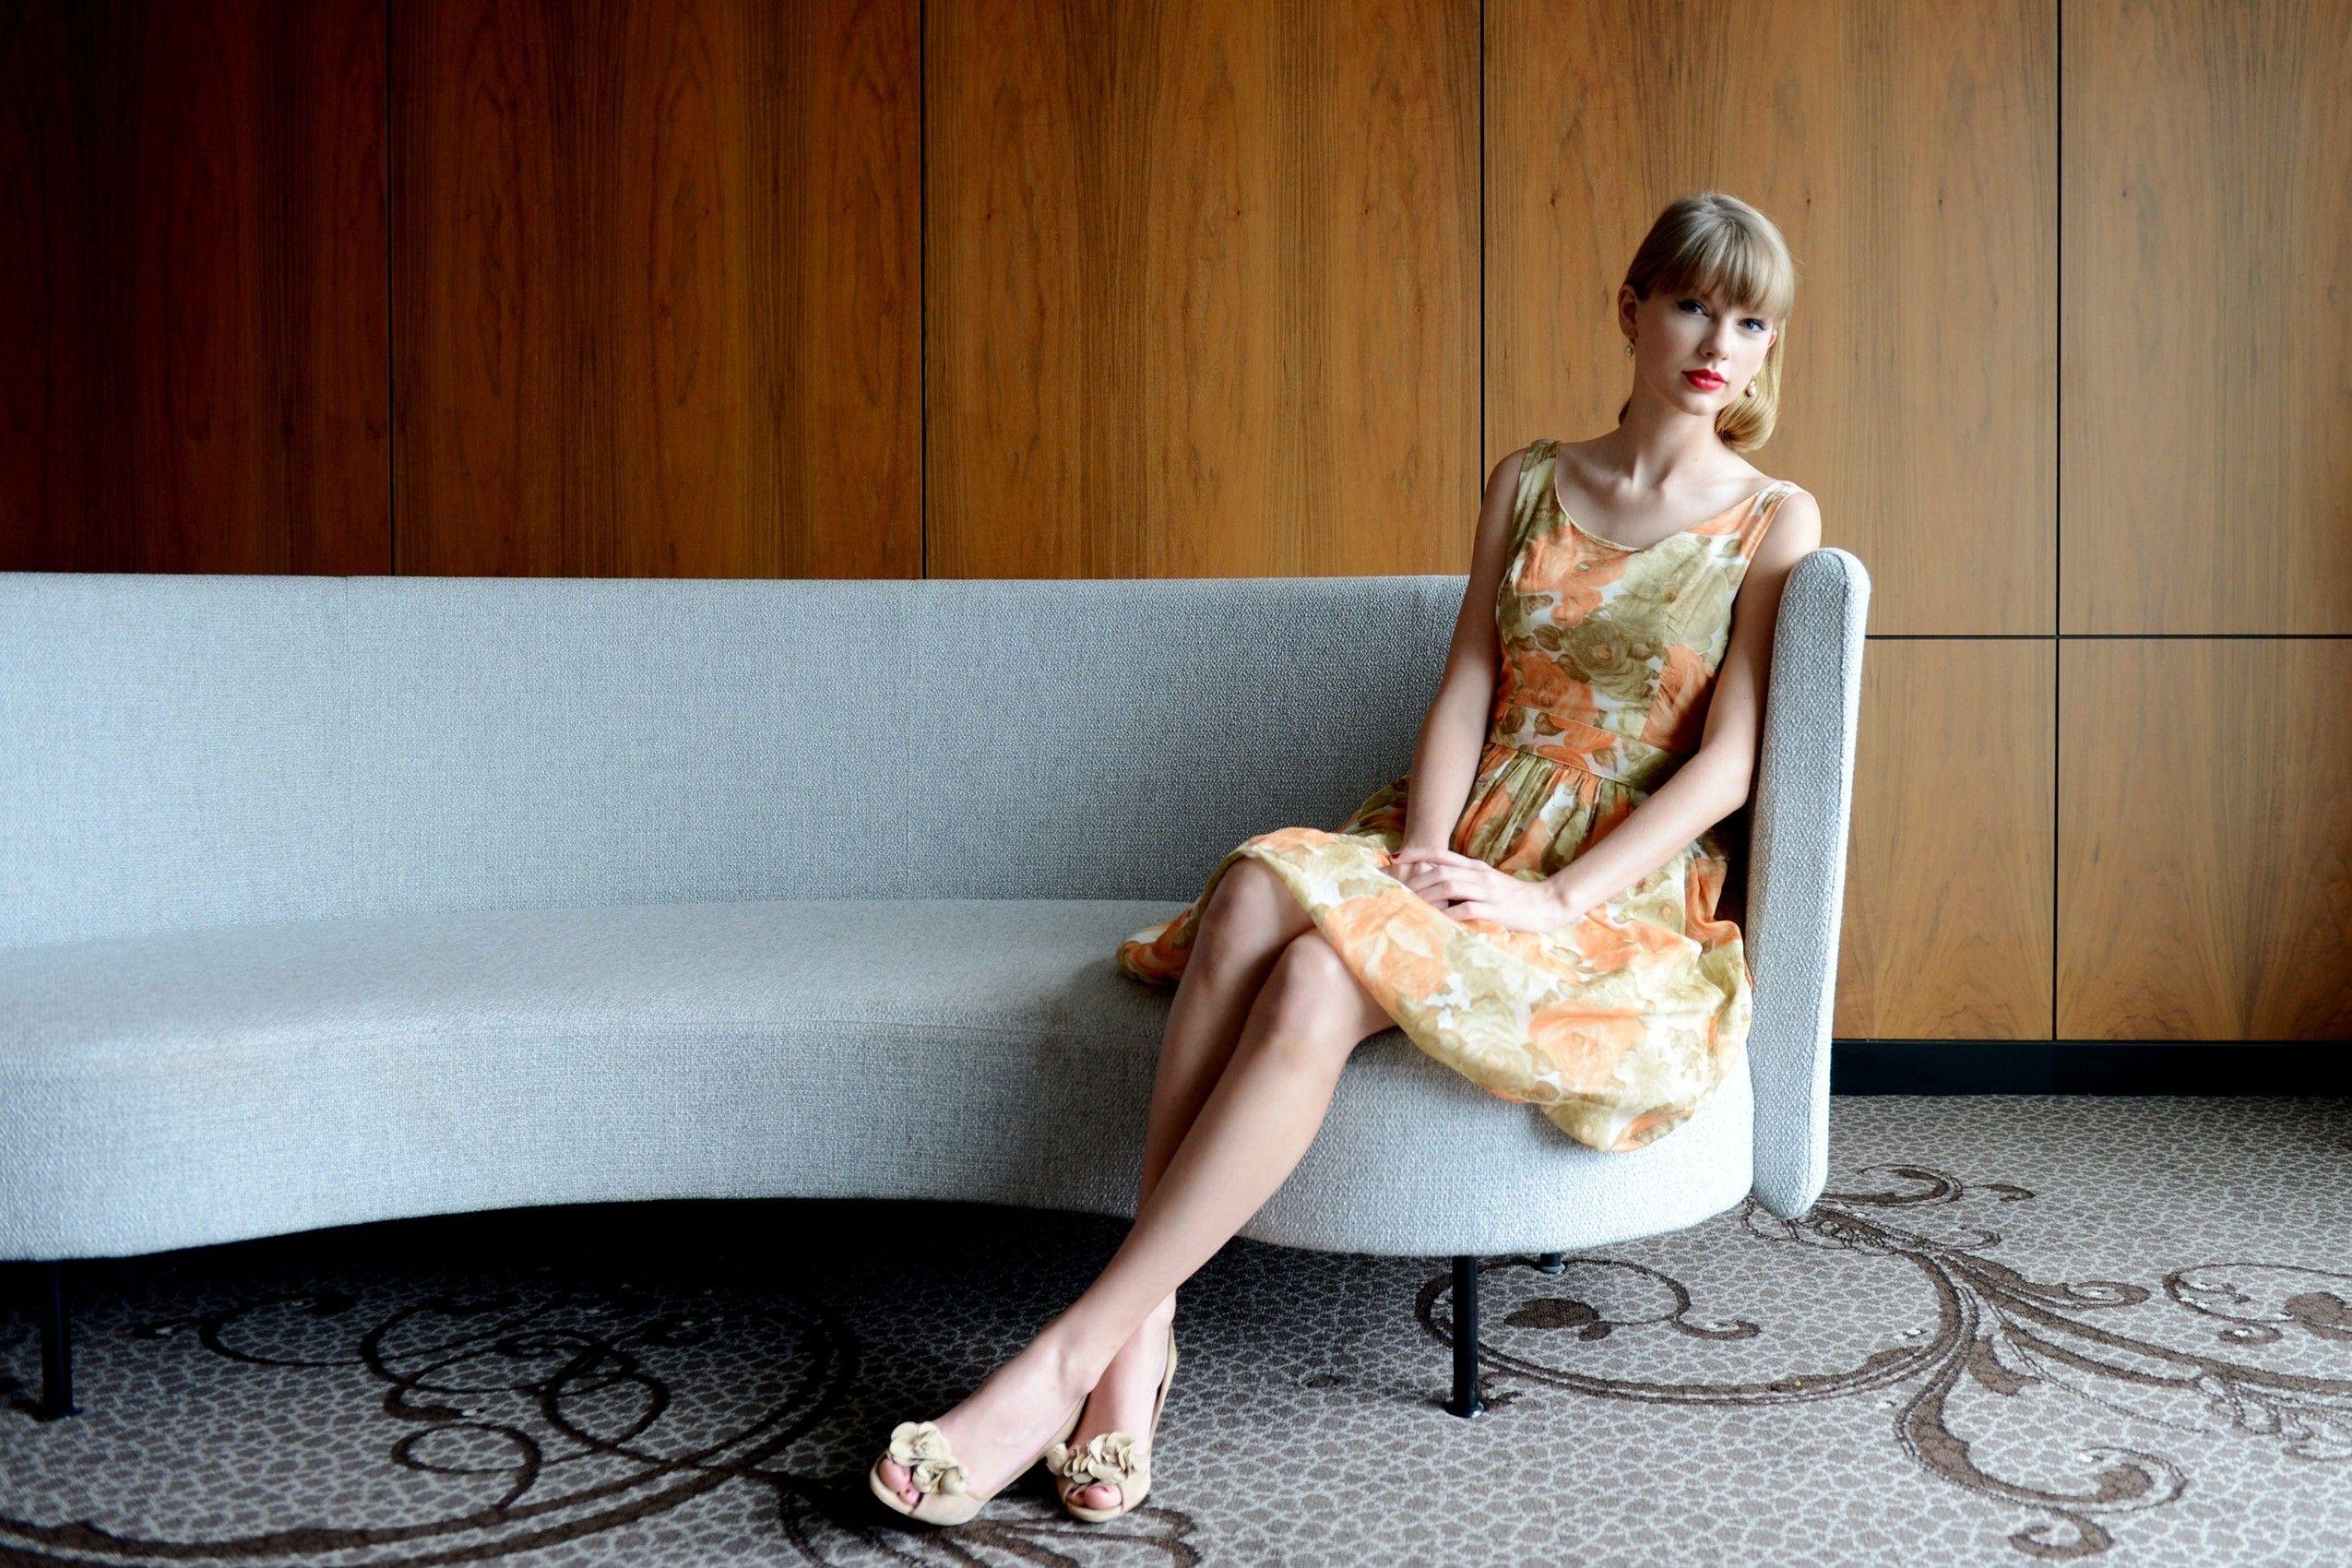 Taylor Swift Wallpaper HD Background, Image, Pics, Photo Free